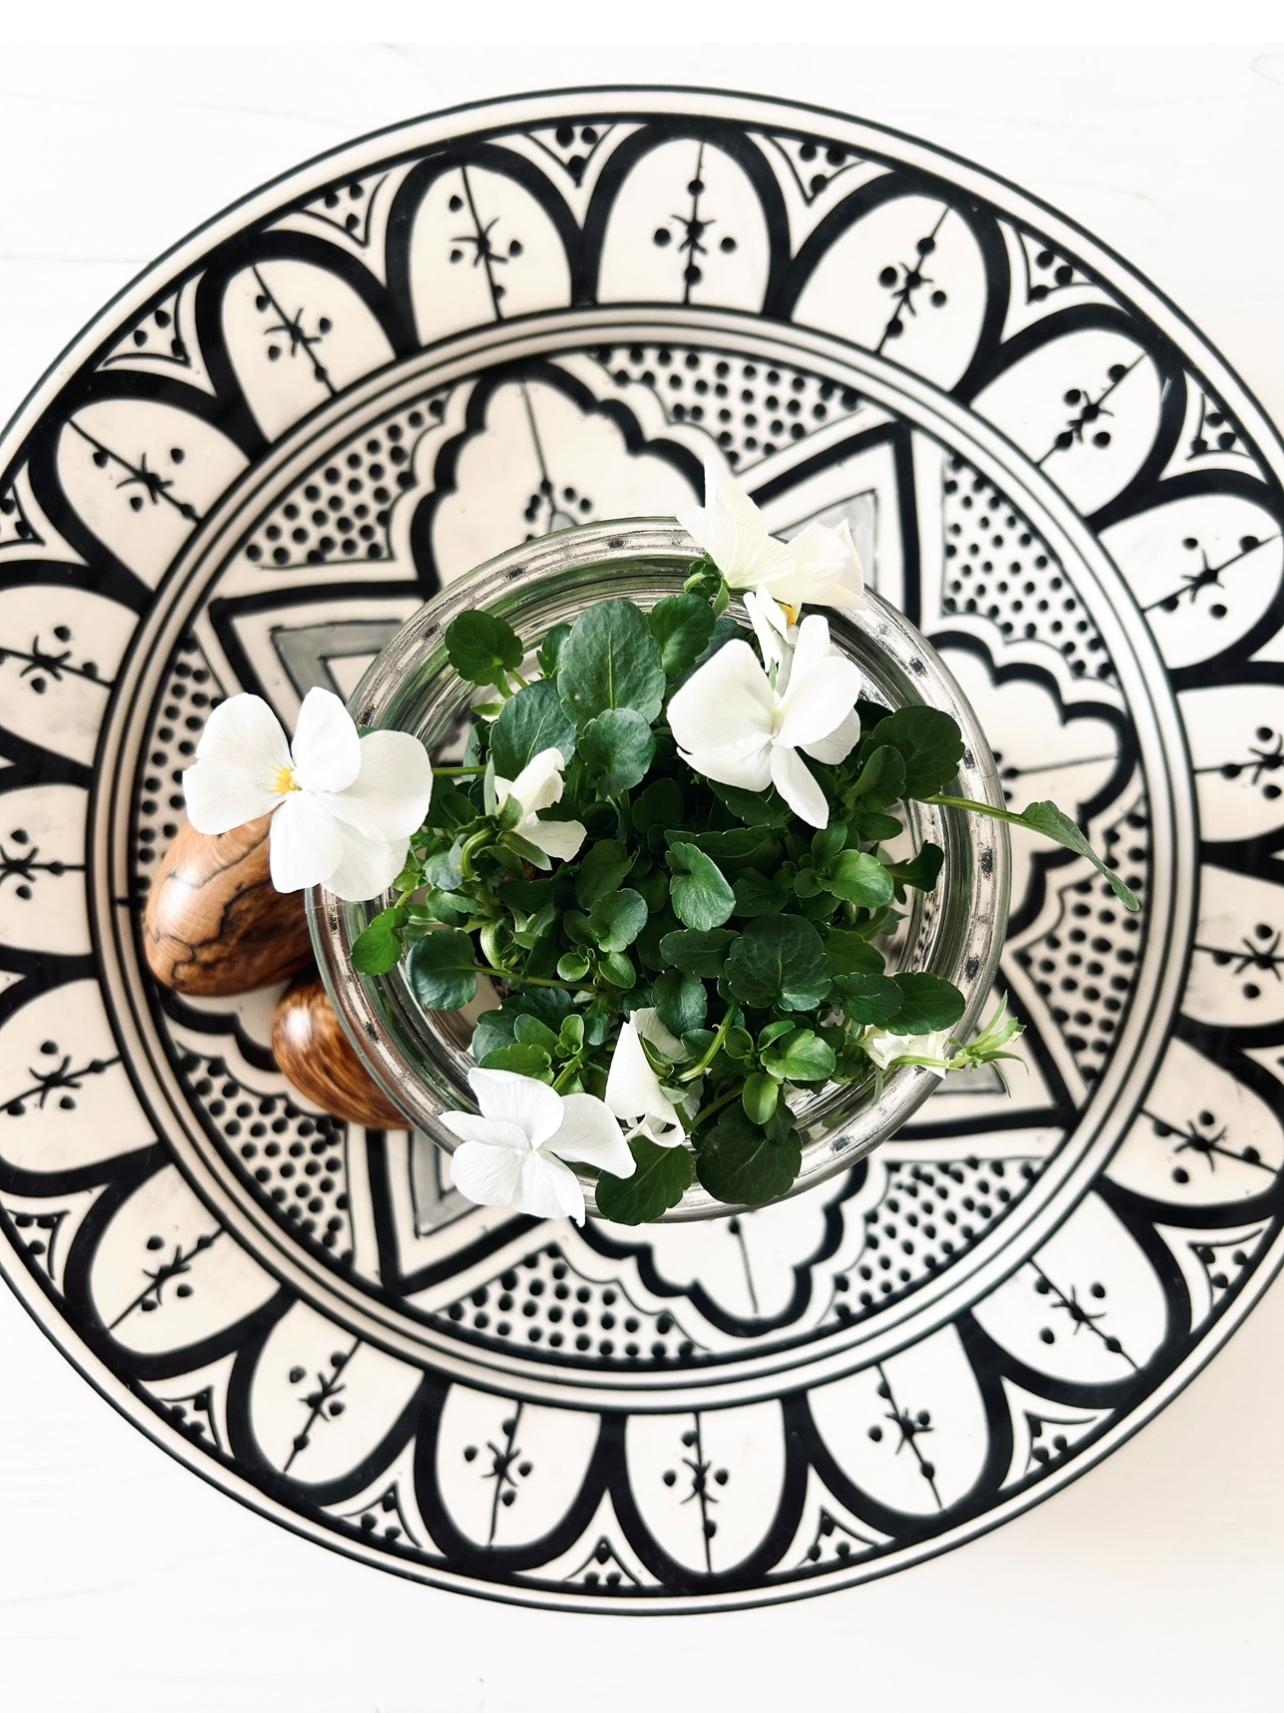 #marokkanisch #keramikliebe #frühlingsblumen #frühlingsvorfreude #skandinavisch #schwedenhaus #ostern #holzeier #ostereier